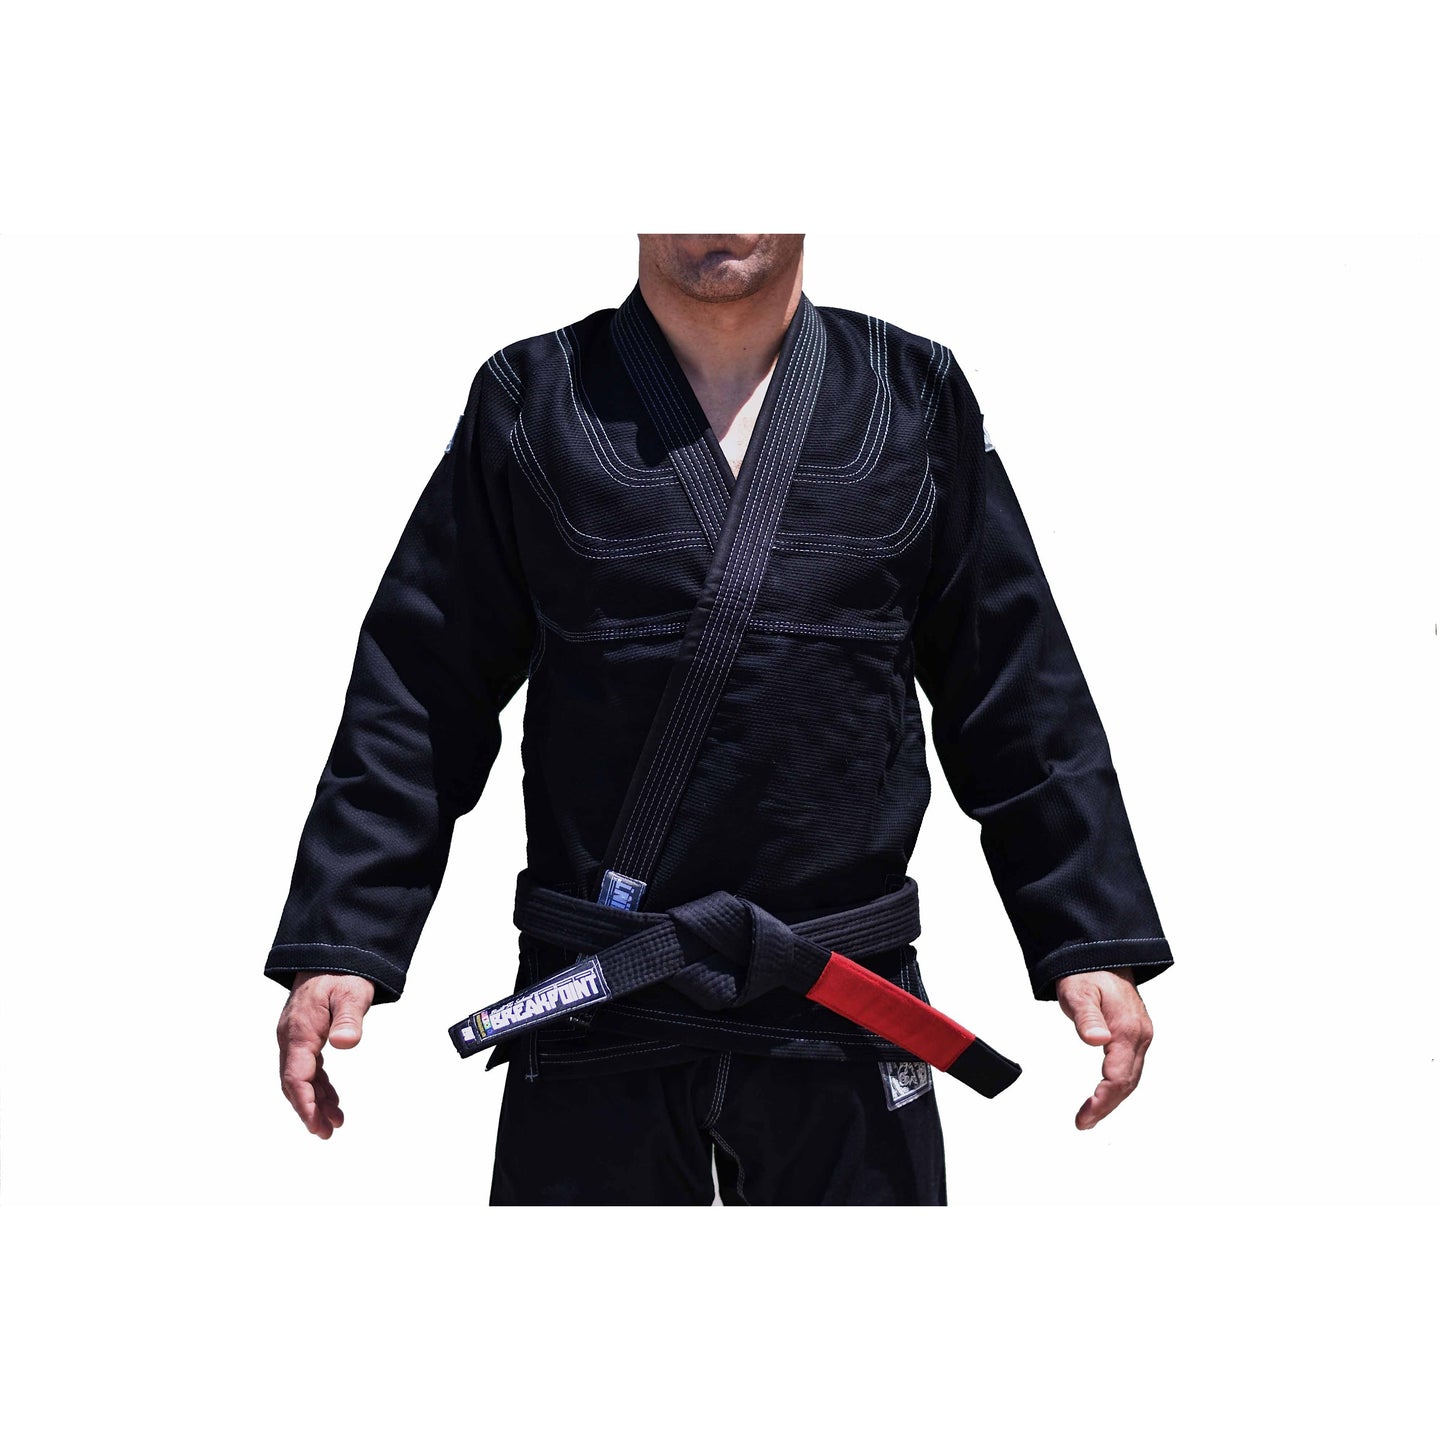 Break Point - Classic Black Jiu Jitsu Gi - Jitsu Armor